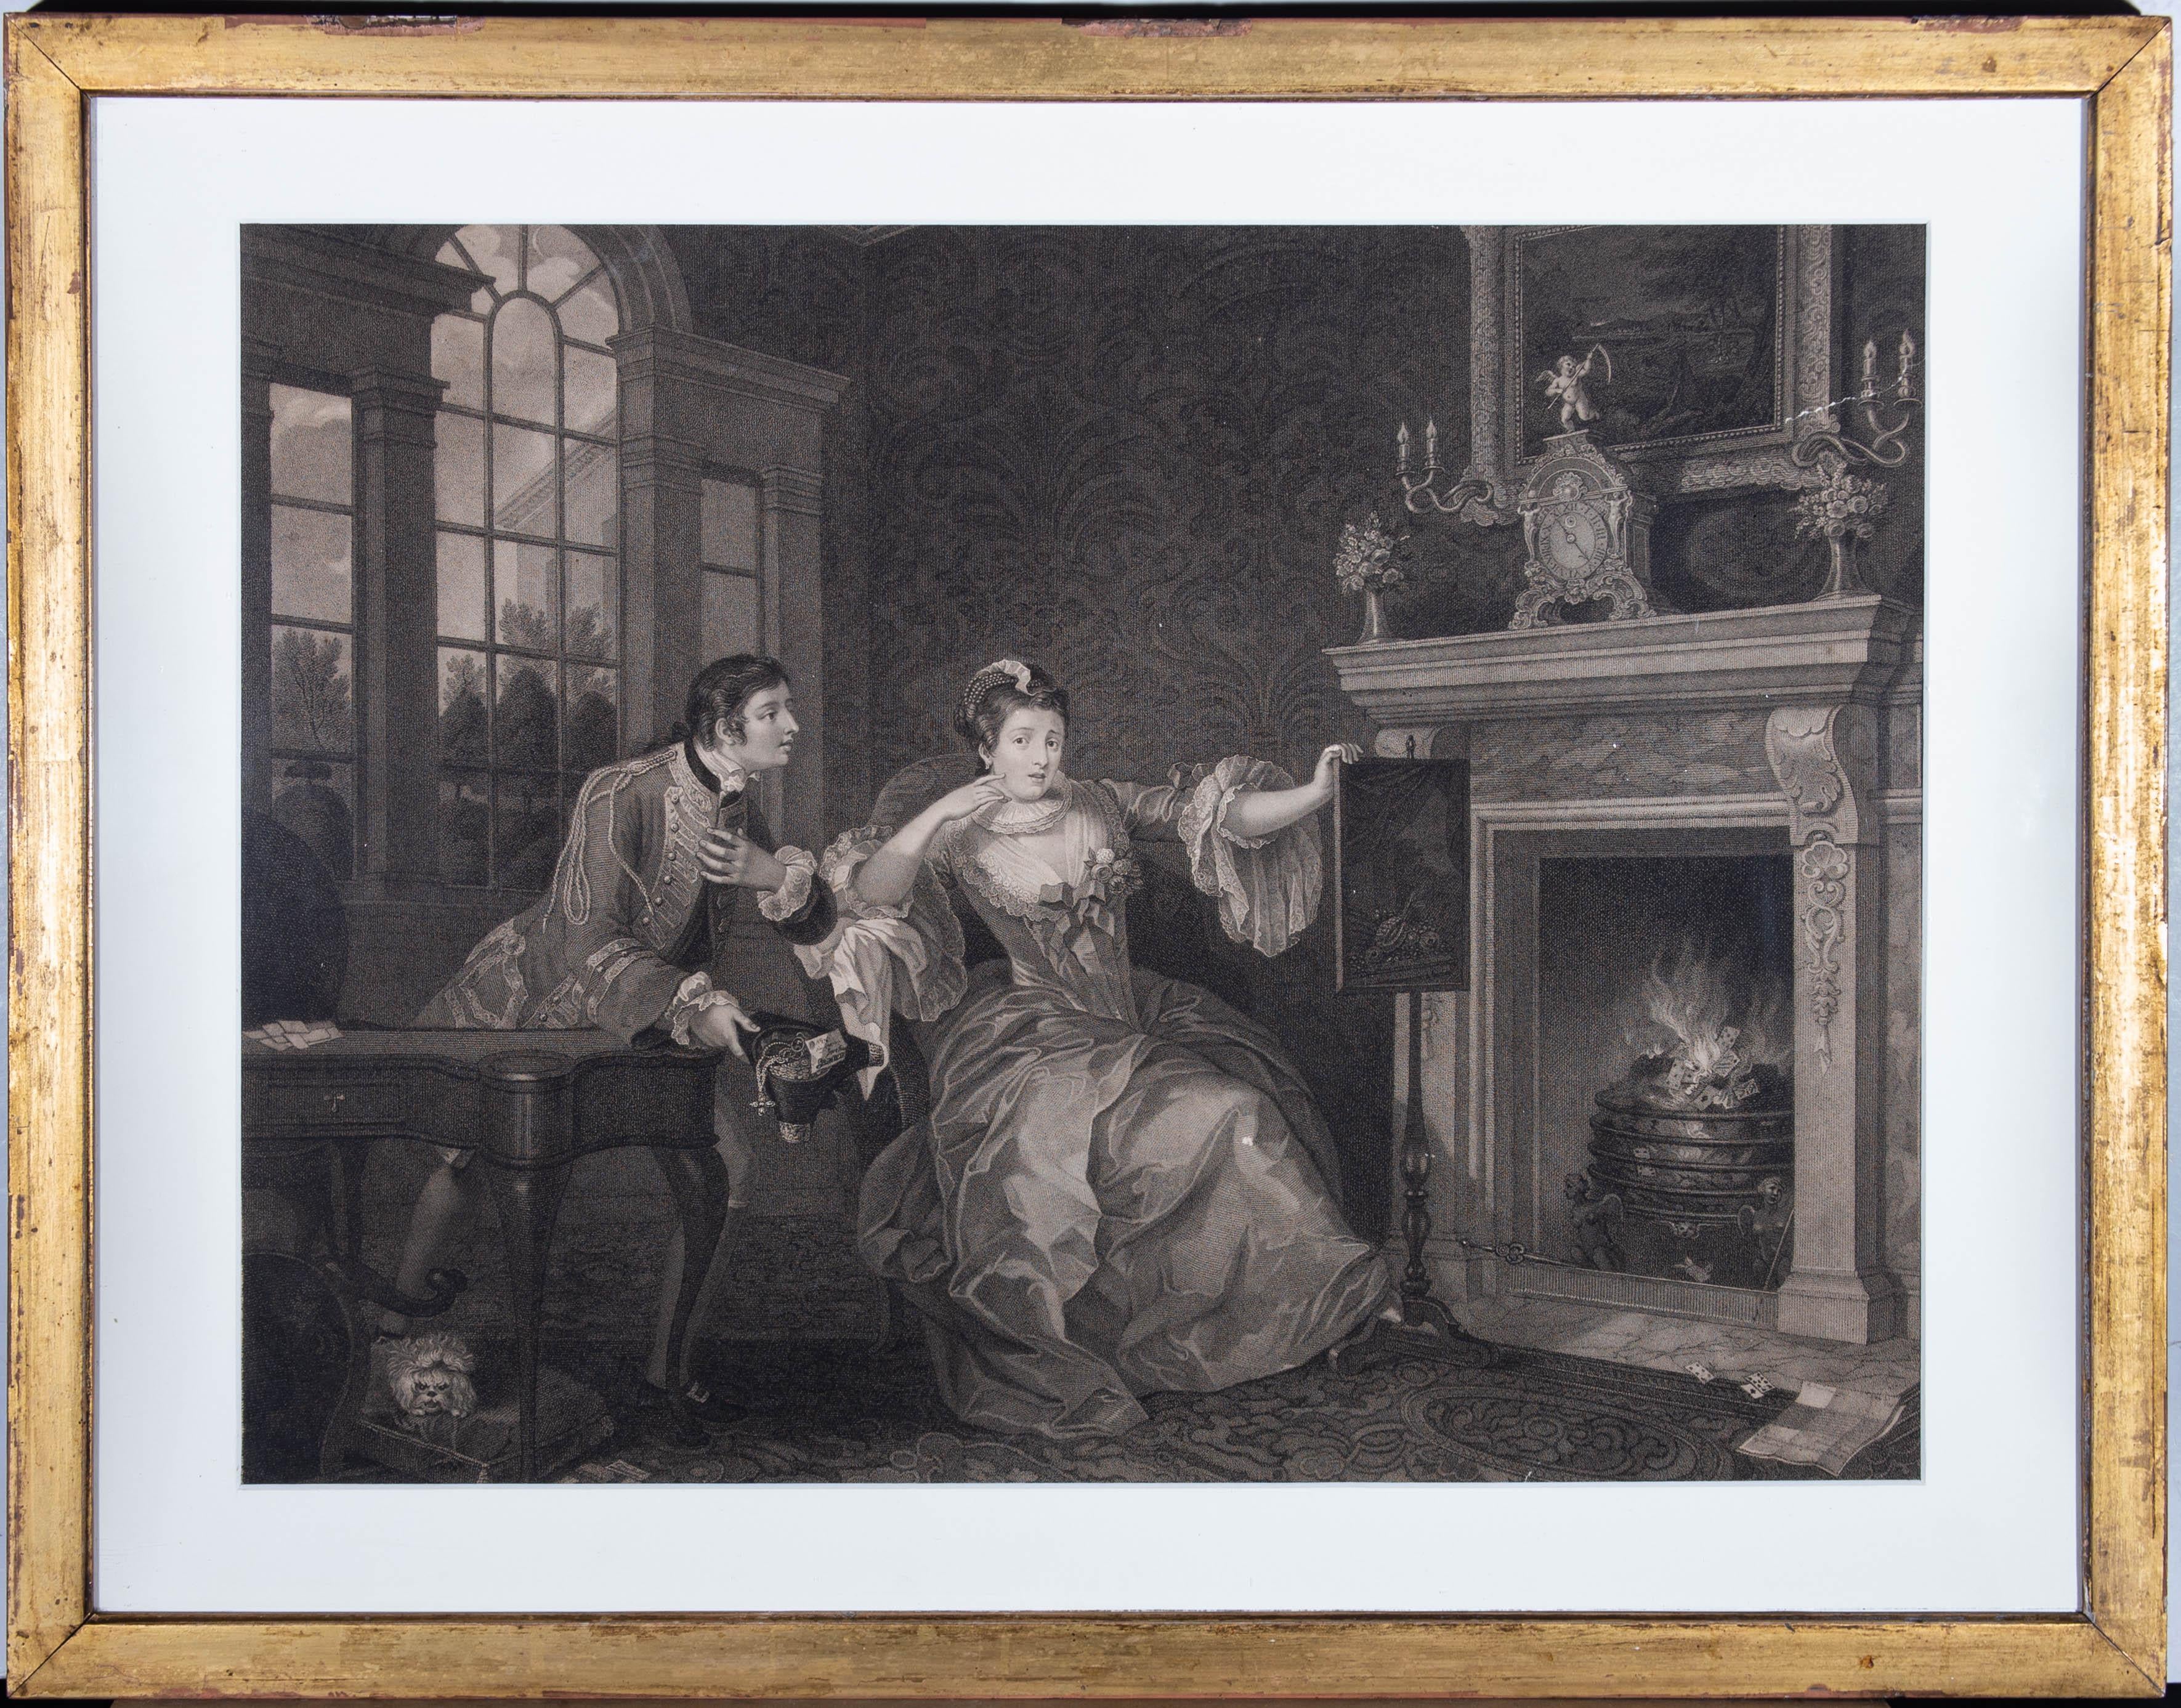 Thomas Cheesman Figurative Print - T. Cheesman (1760-1834) after Hogarth - 1820 Engraving, The Lady's Last Stake